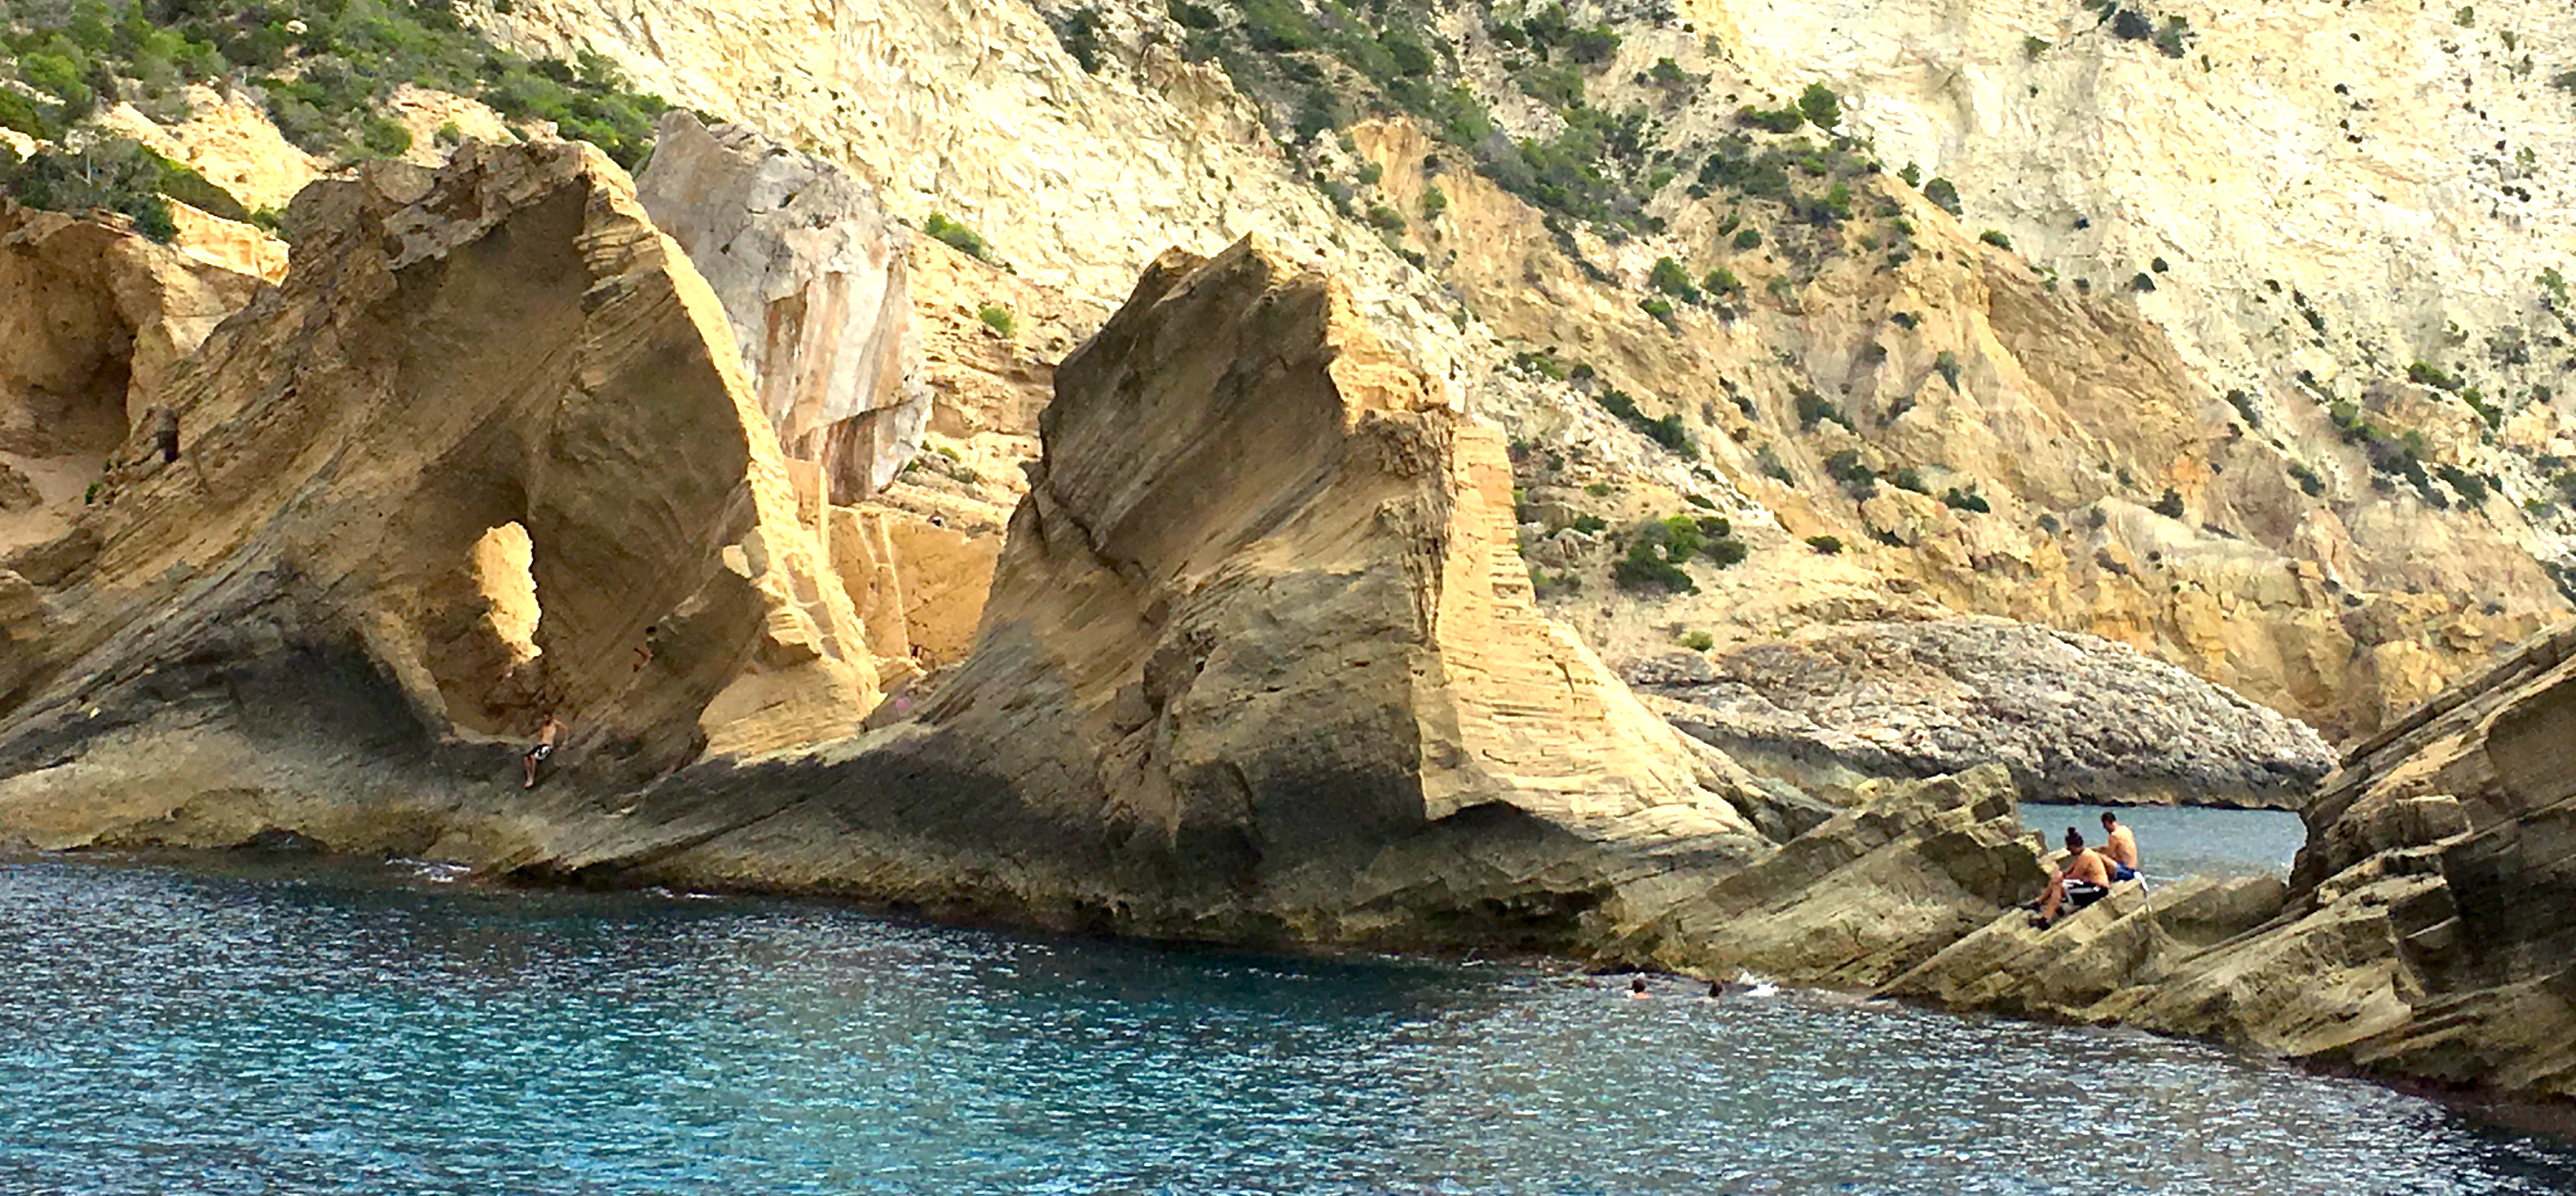 excursión en catamaran de un día en Ibiza. Cala de Atlantis